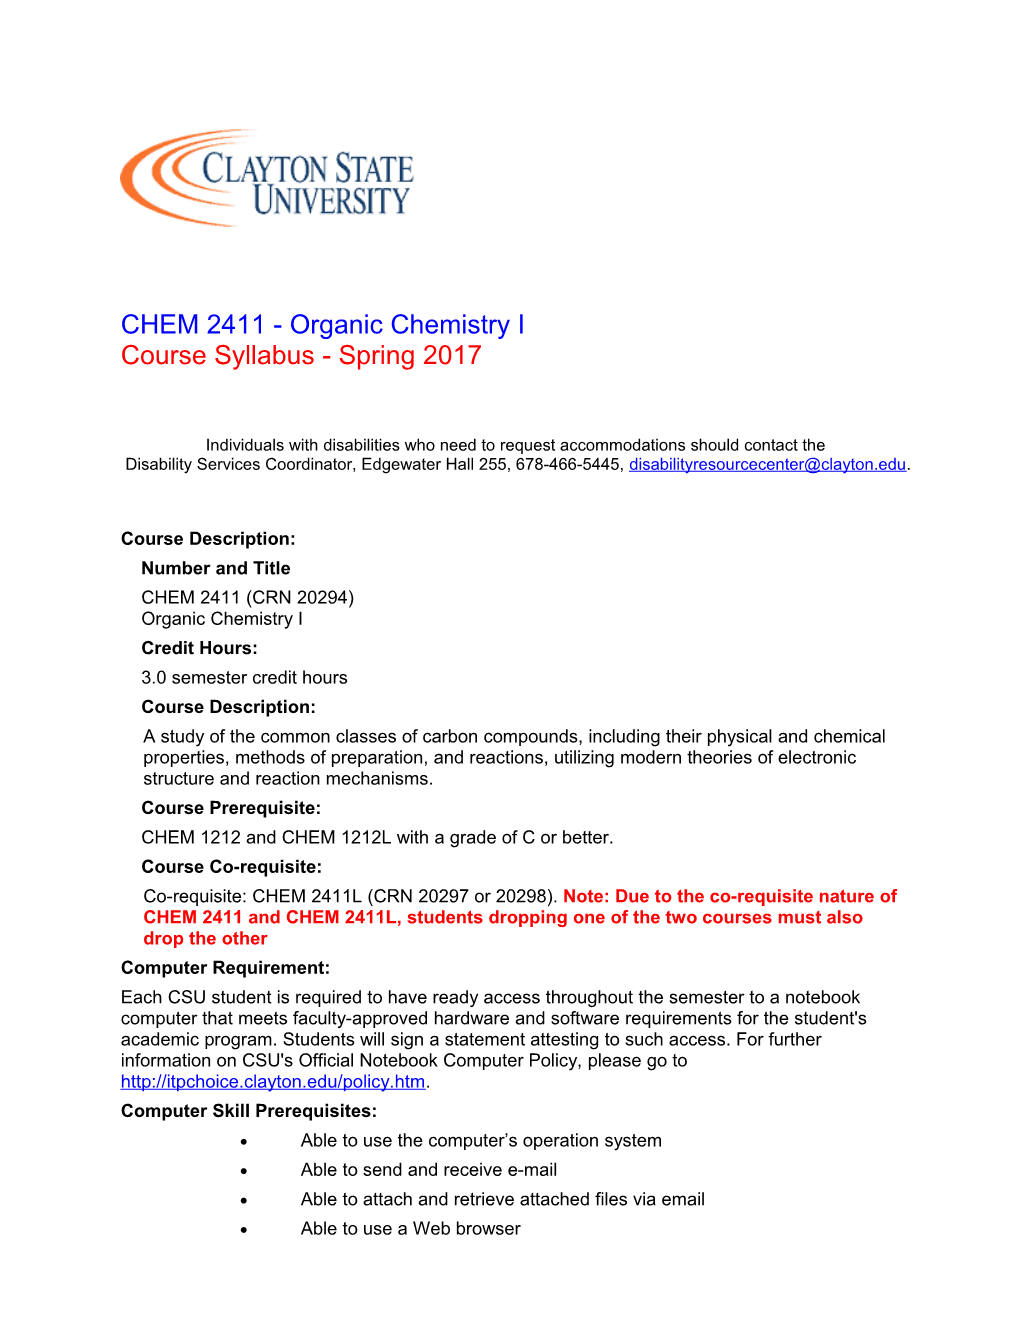 CHEM 2411 - Organic Chemistry I Course Syllabus - Spring2017